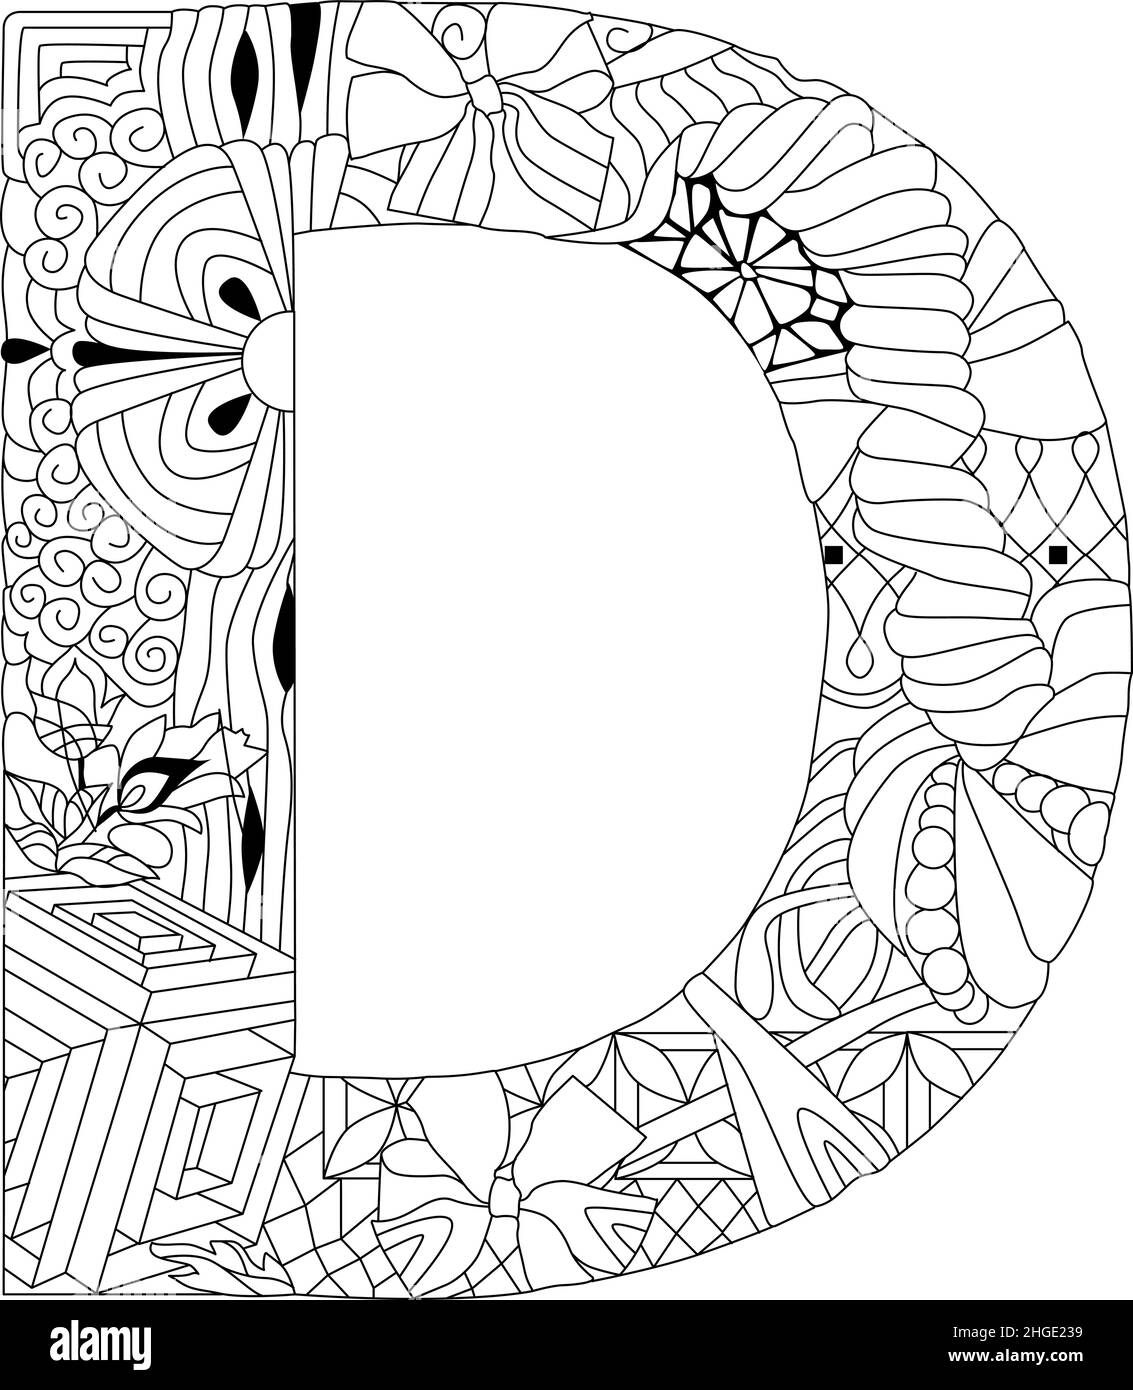 Zentangle stylized alphabet - letter D for coloring. Vector illustration. Ethnic pattern Stock Vector